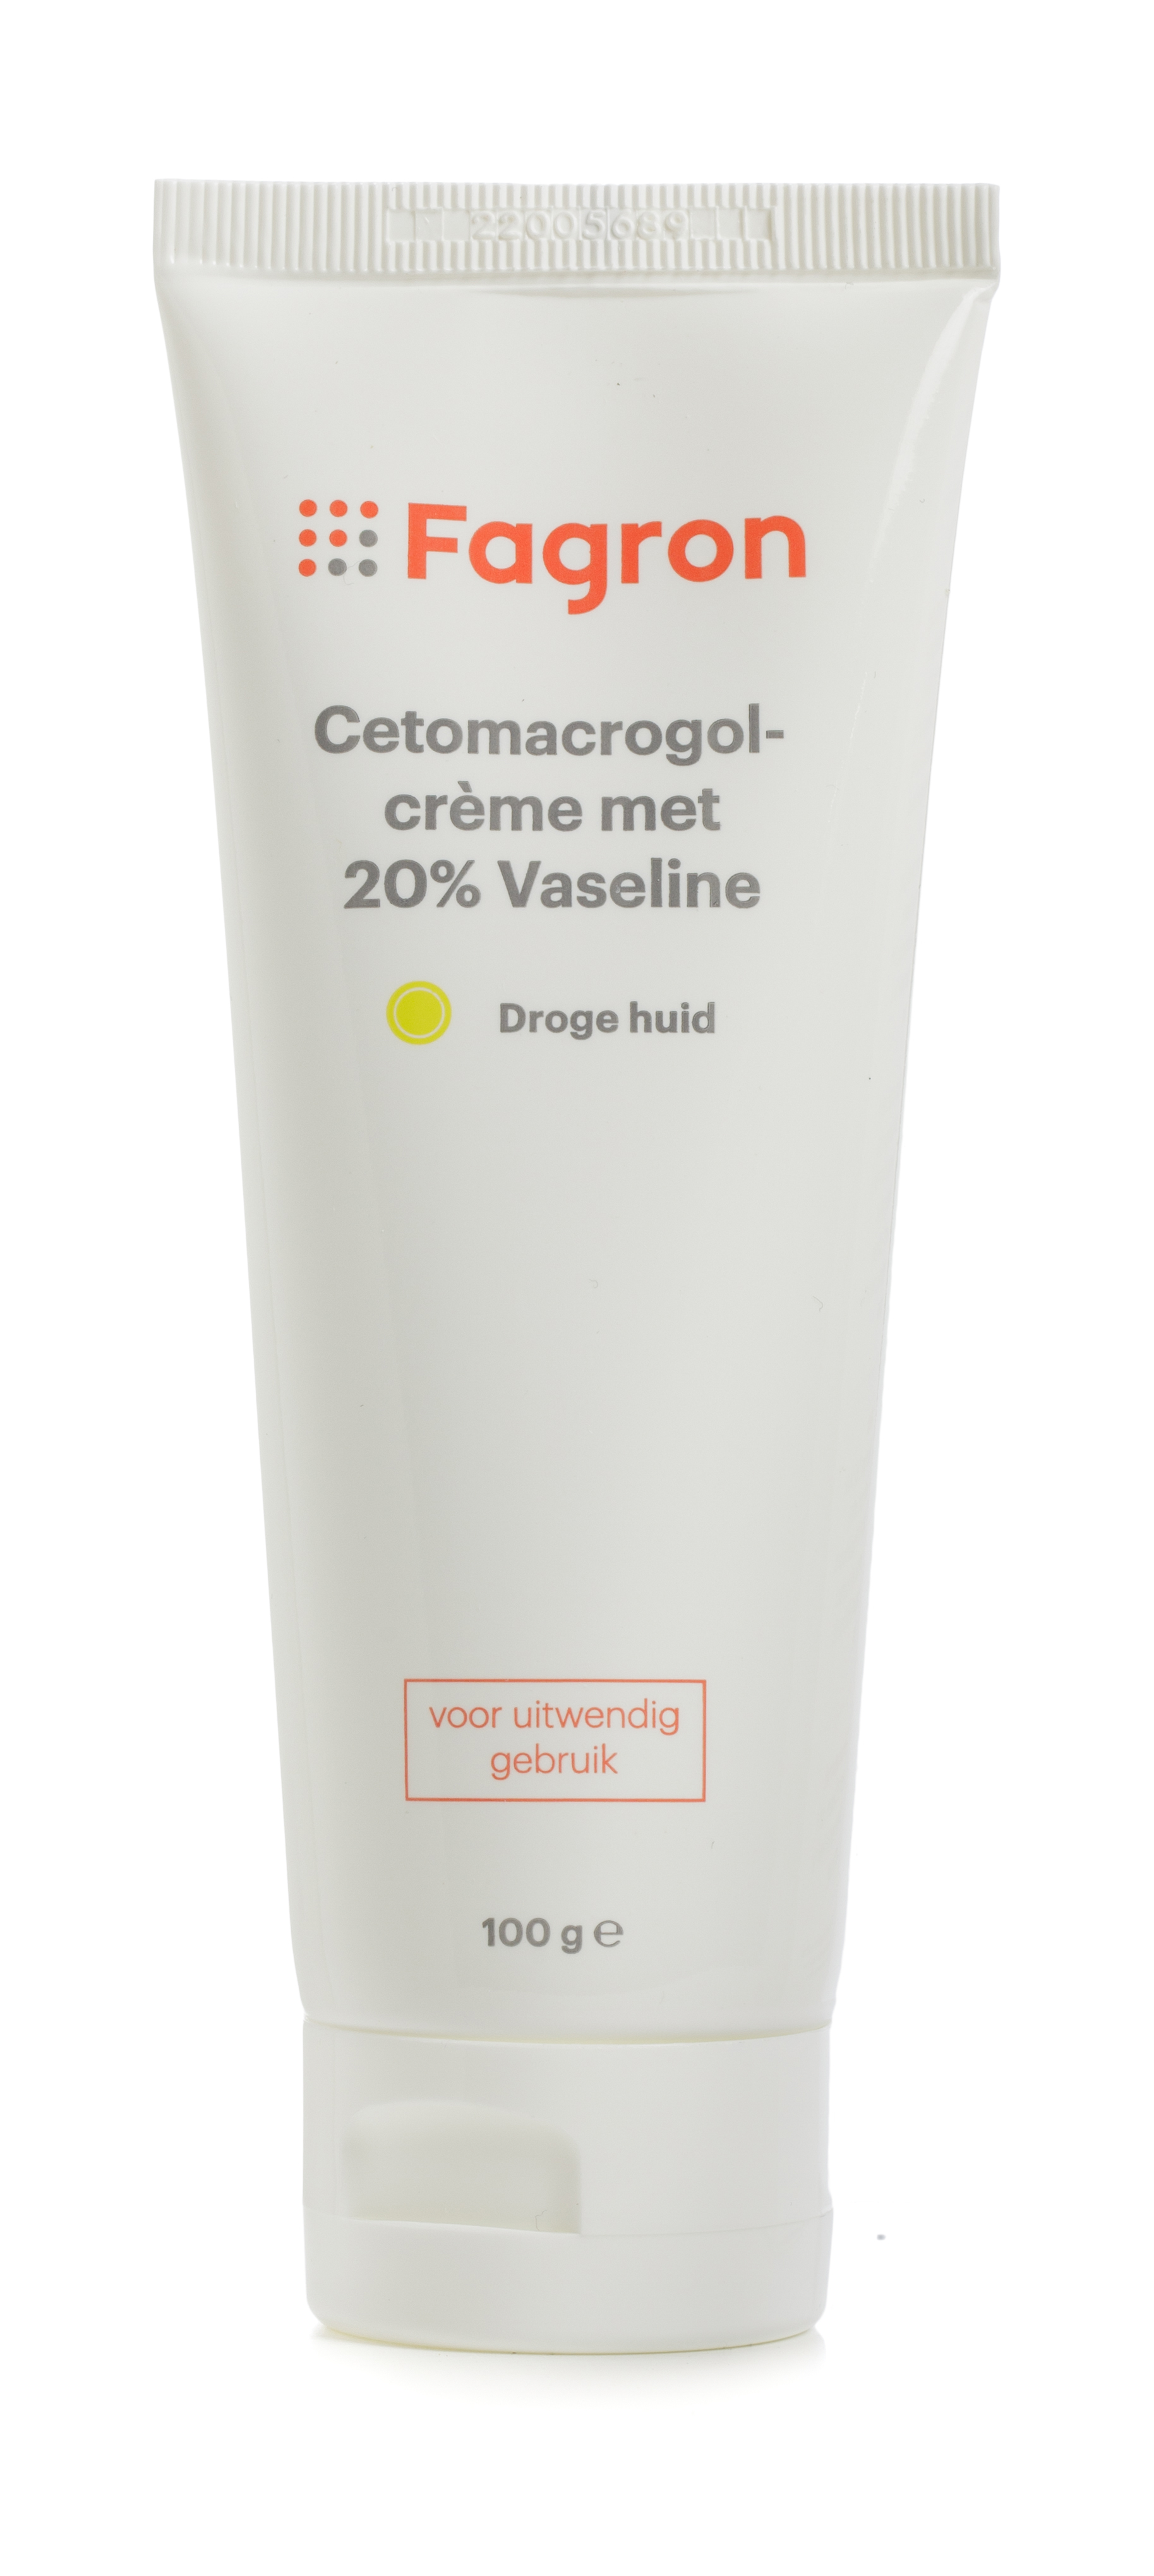 Fagron Cetomacrogolcrème 20% Vaseline (100g)